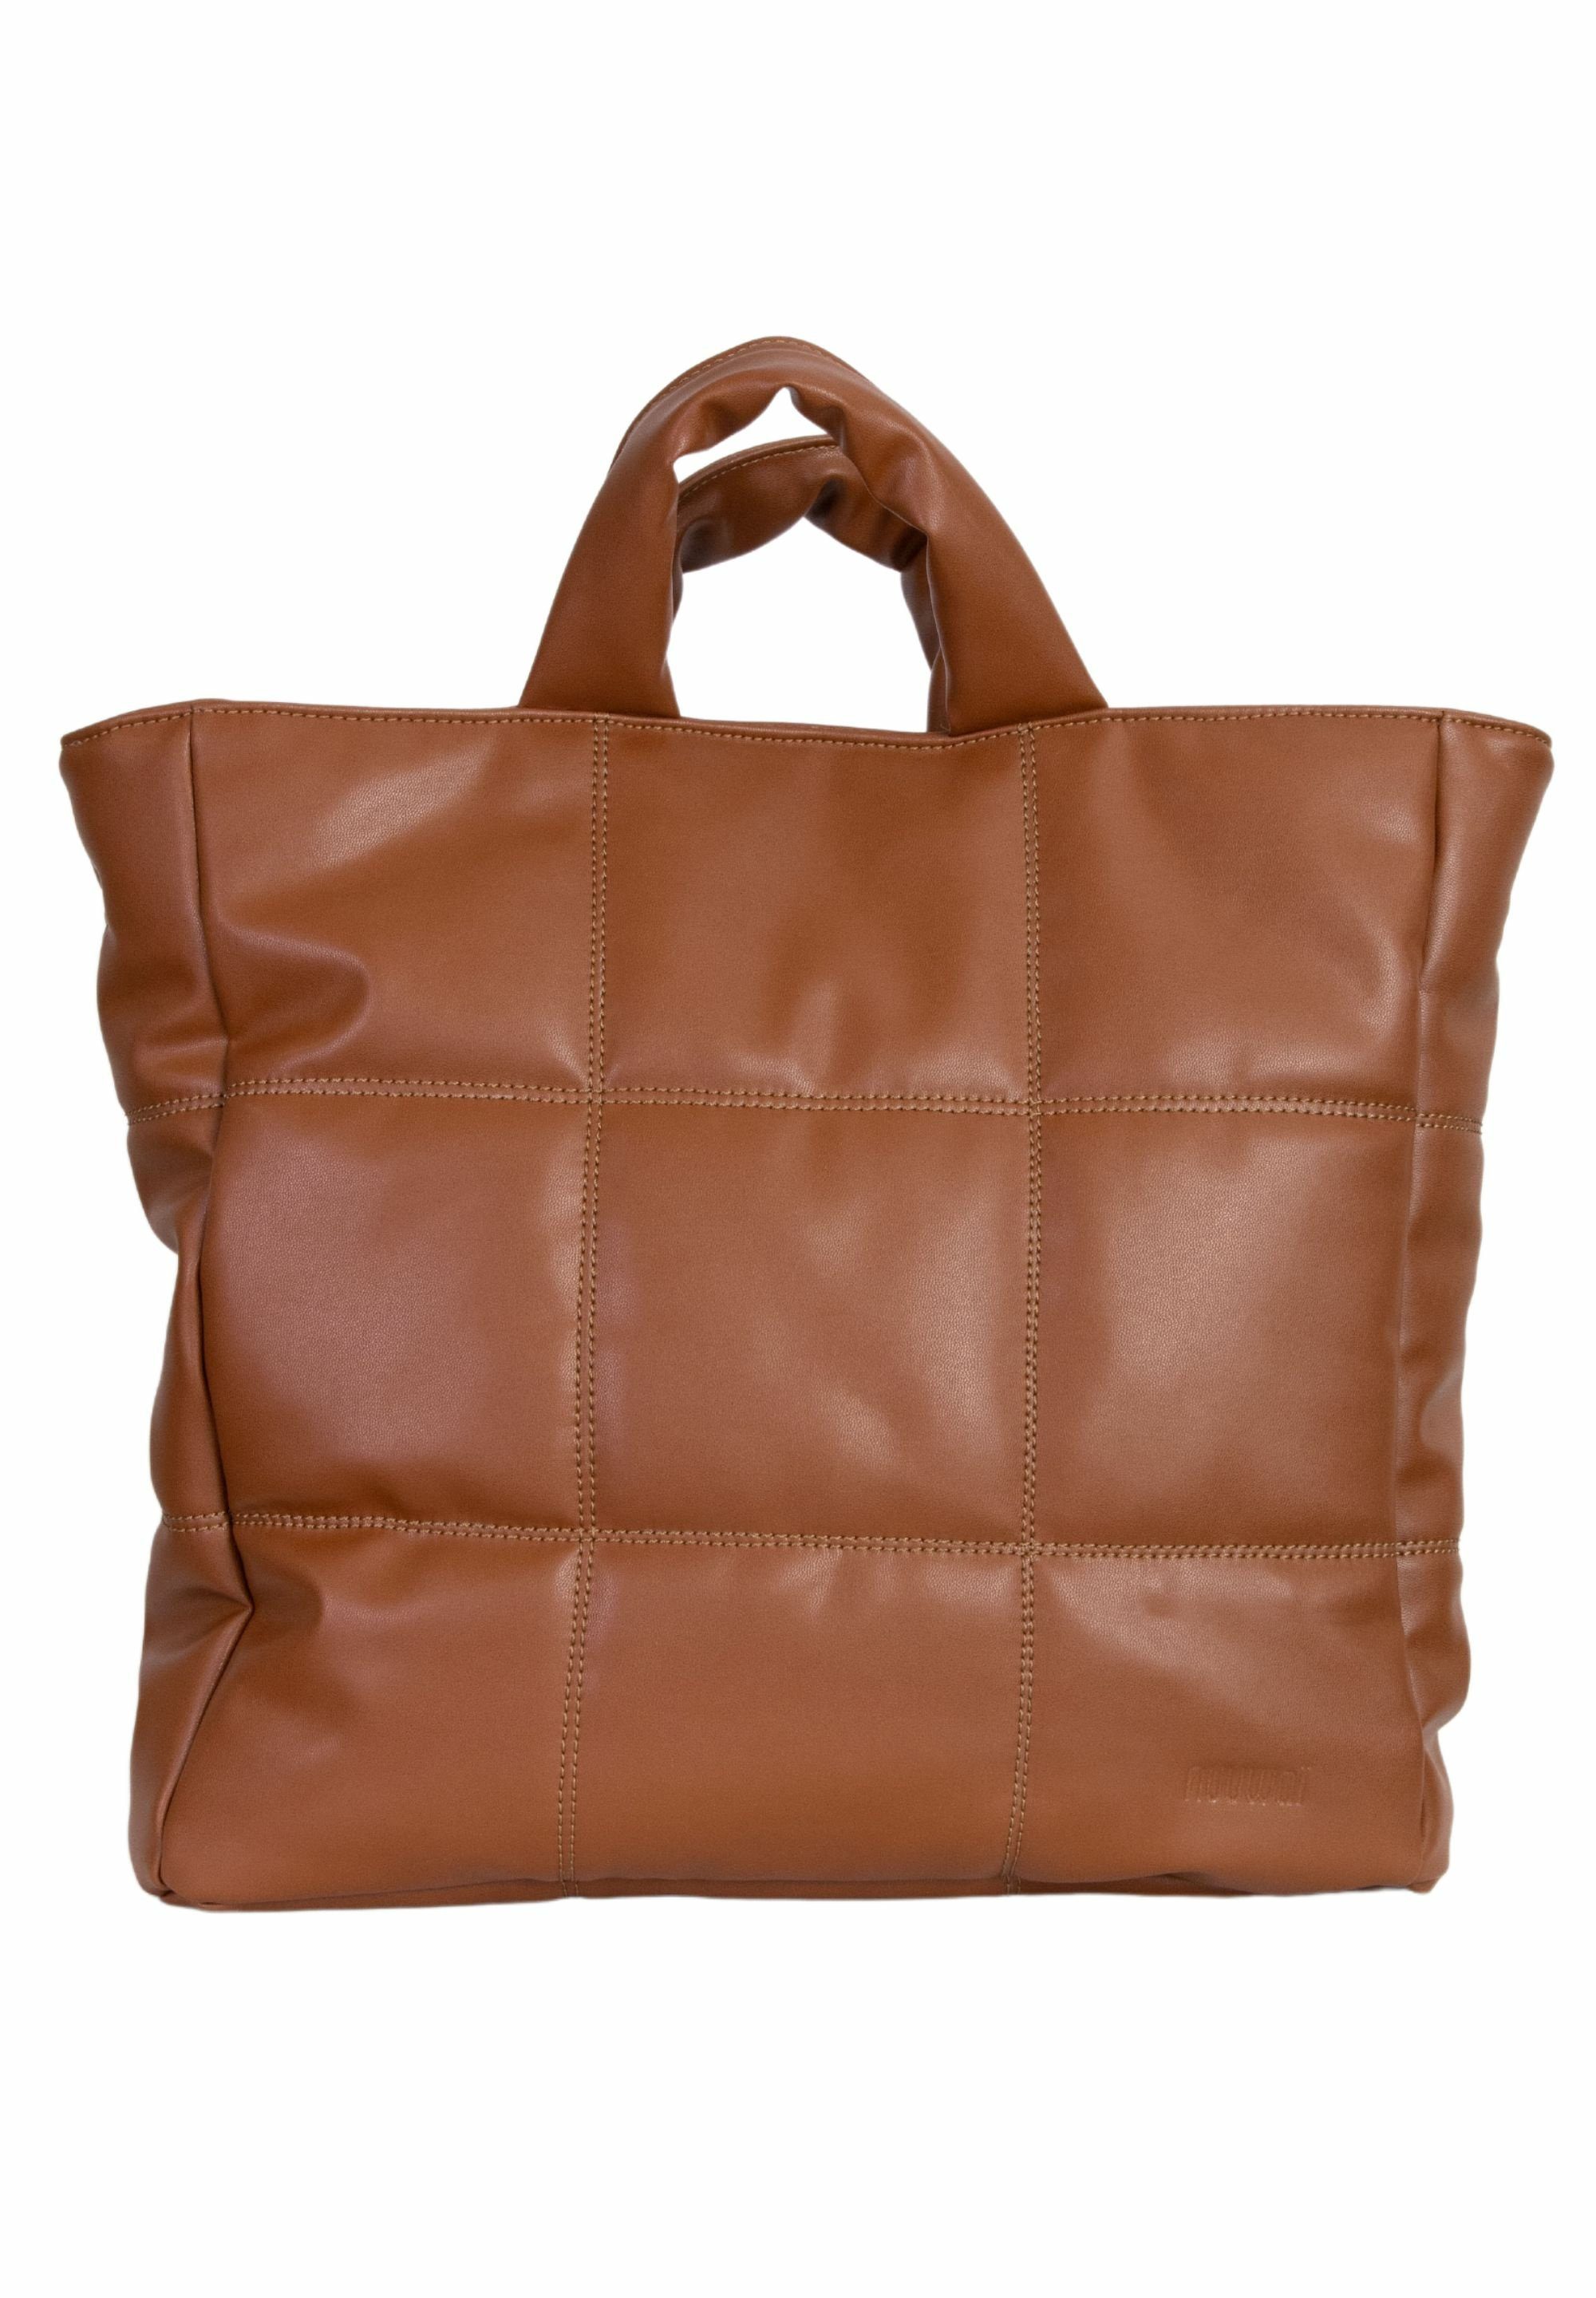 LINN, nuuwai bio-basierte nachhaltig, caramel fair Lederalternative Handtasche brown &